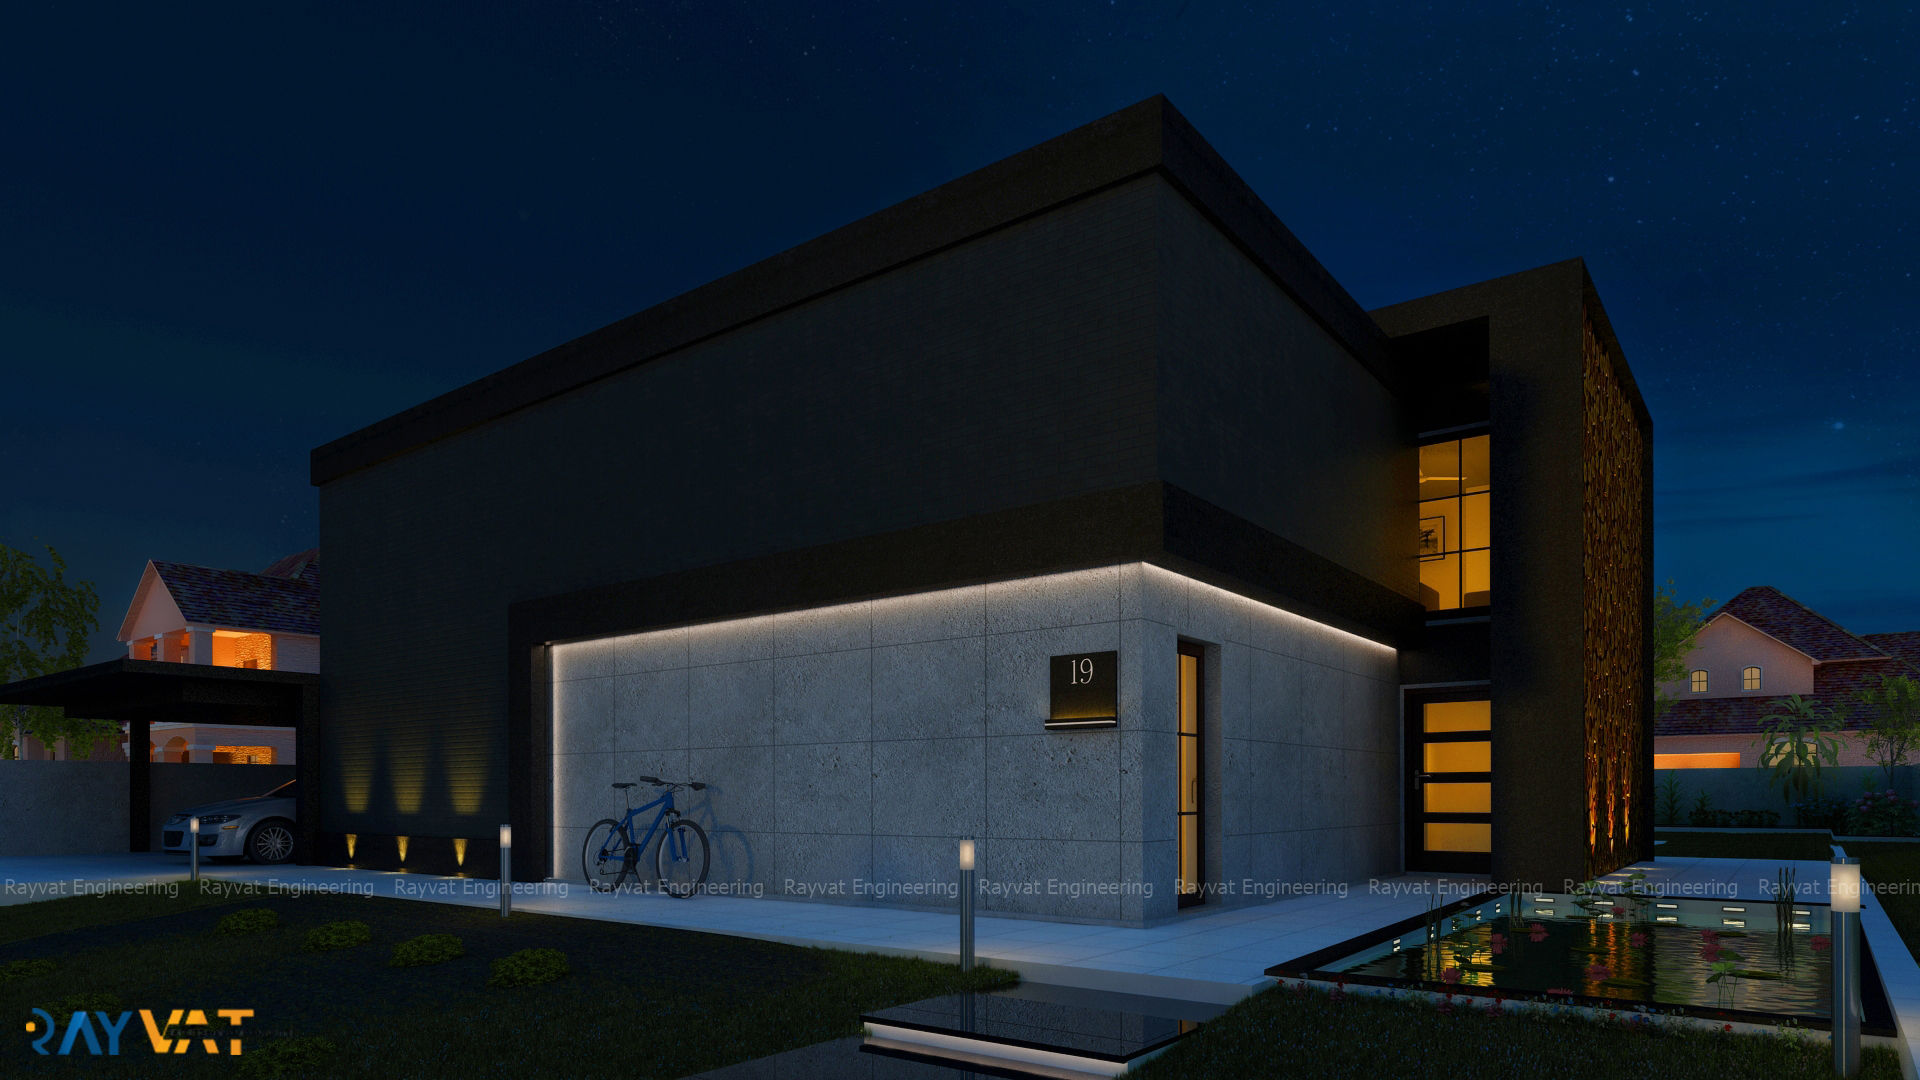 Exterior Designs - Night homify 단층집 House Exterior,3D Exterior,Exterior View Design,Exterior Elevation